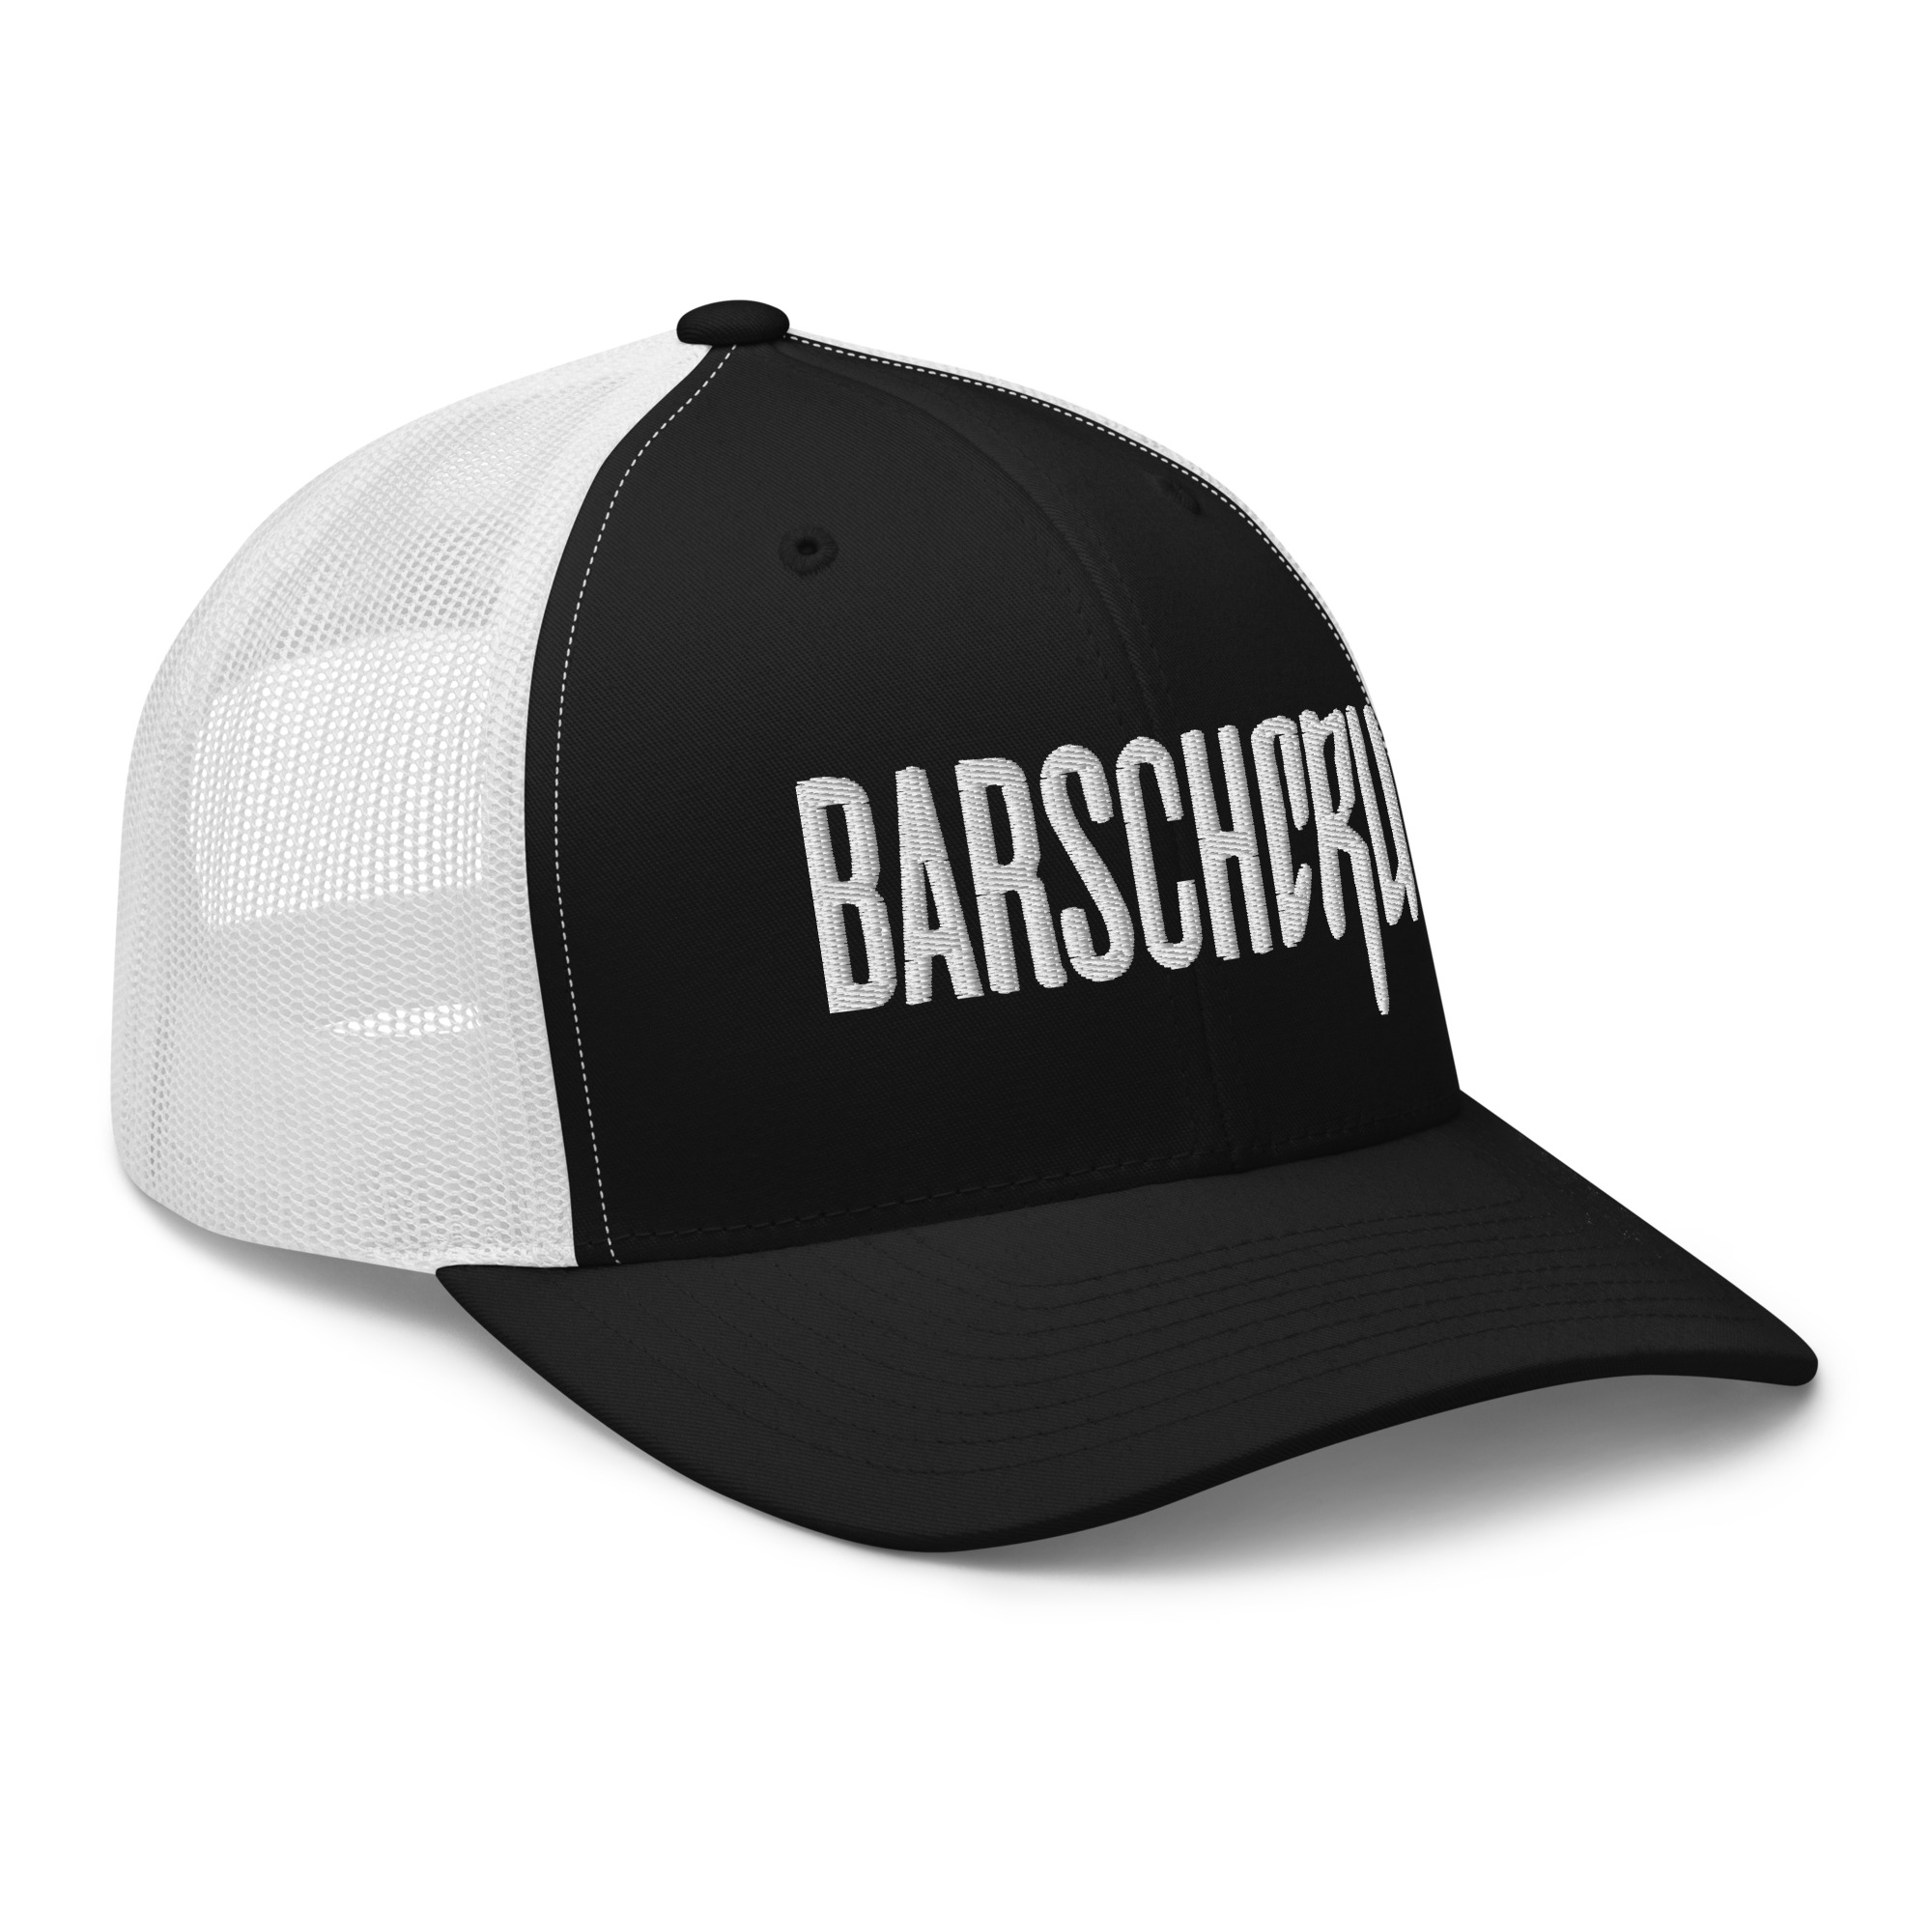 BARSCHCRU Trucker-Cap